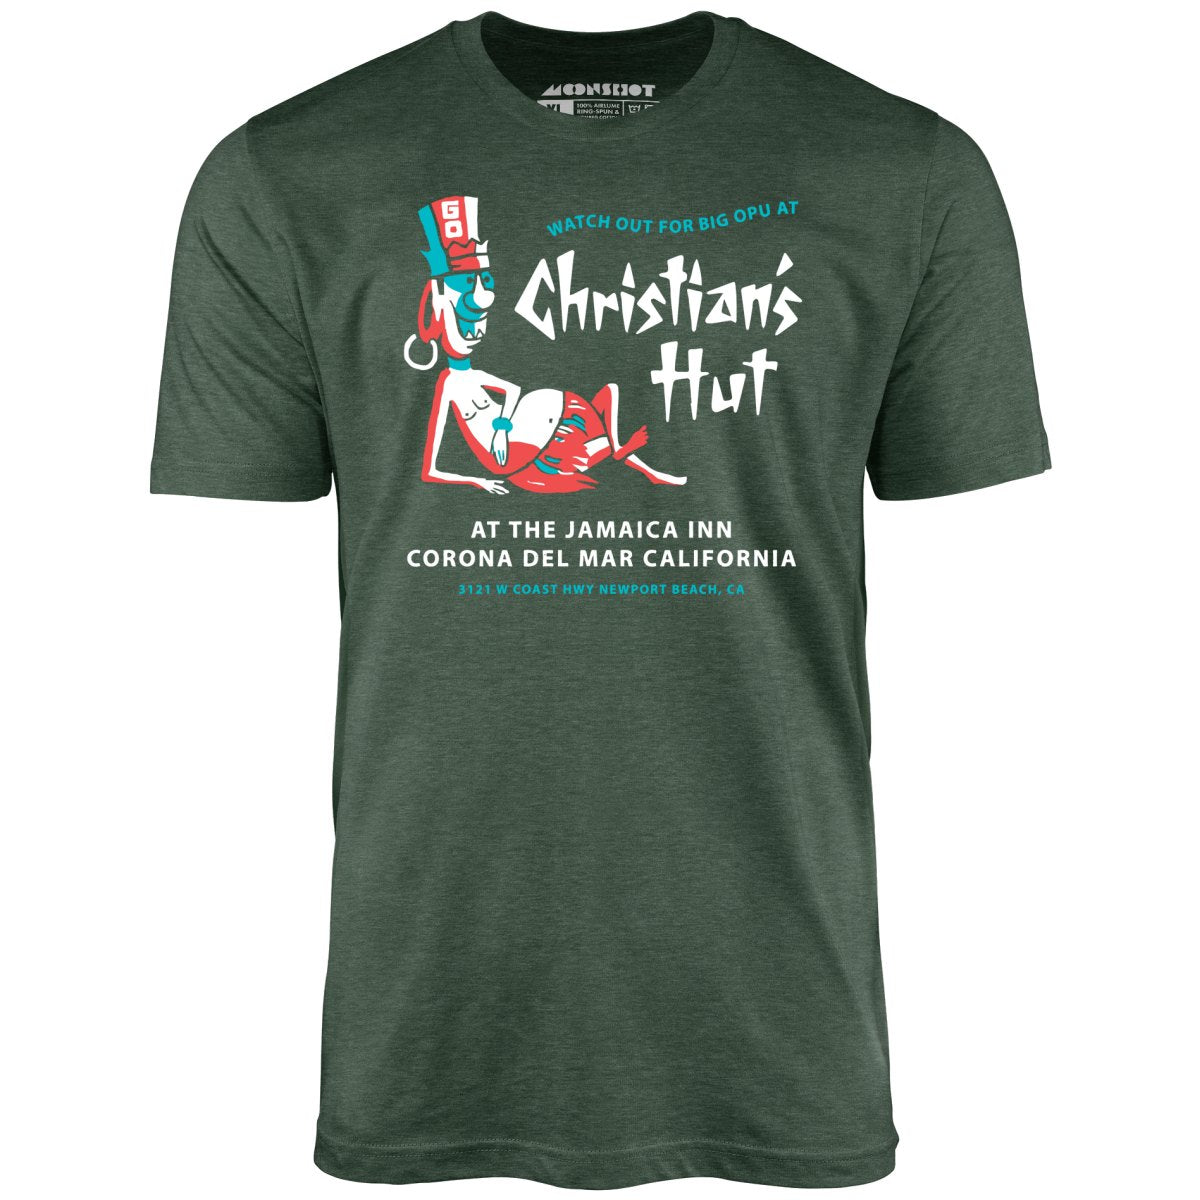 Christian's Hut - Corona Del Mar, CA - Vintage Tiki Bar - Unisex T-Shirt